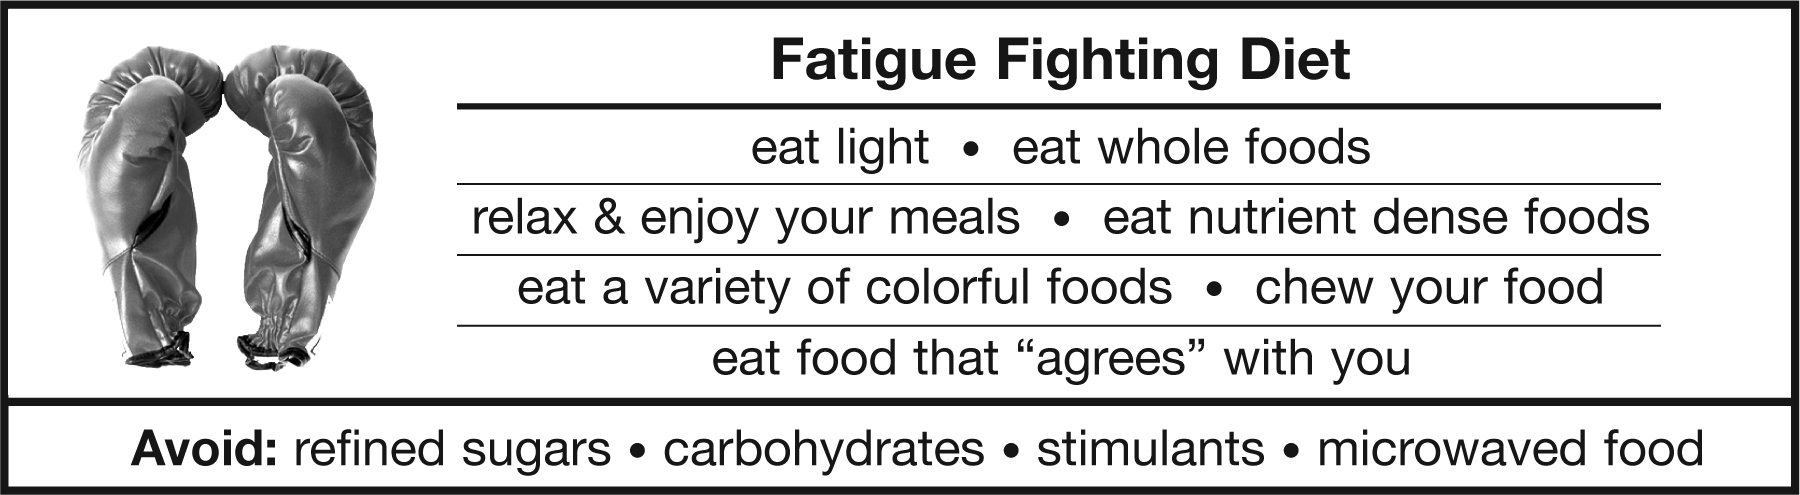 Fatigue Fighting Diet CHART